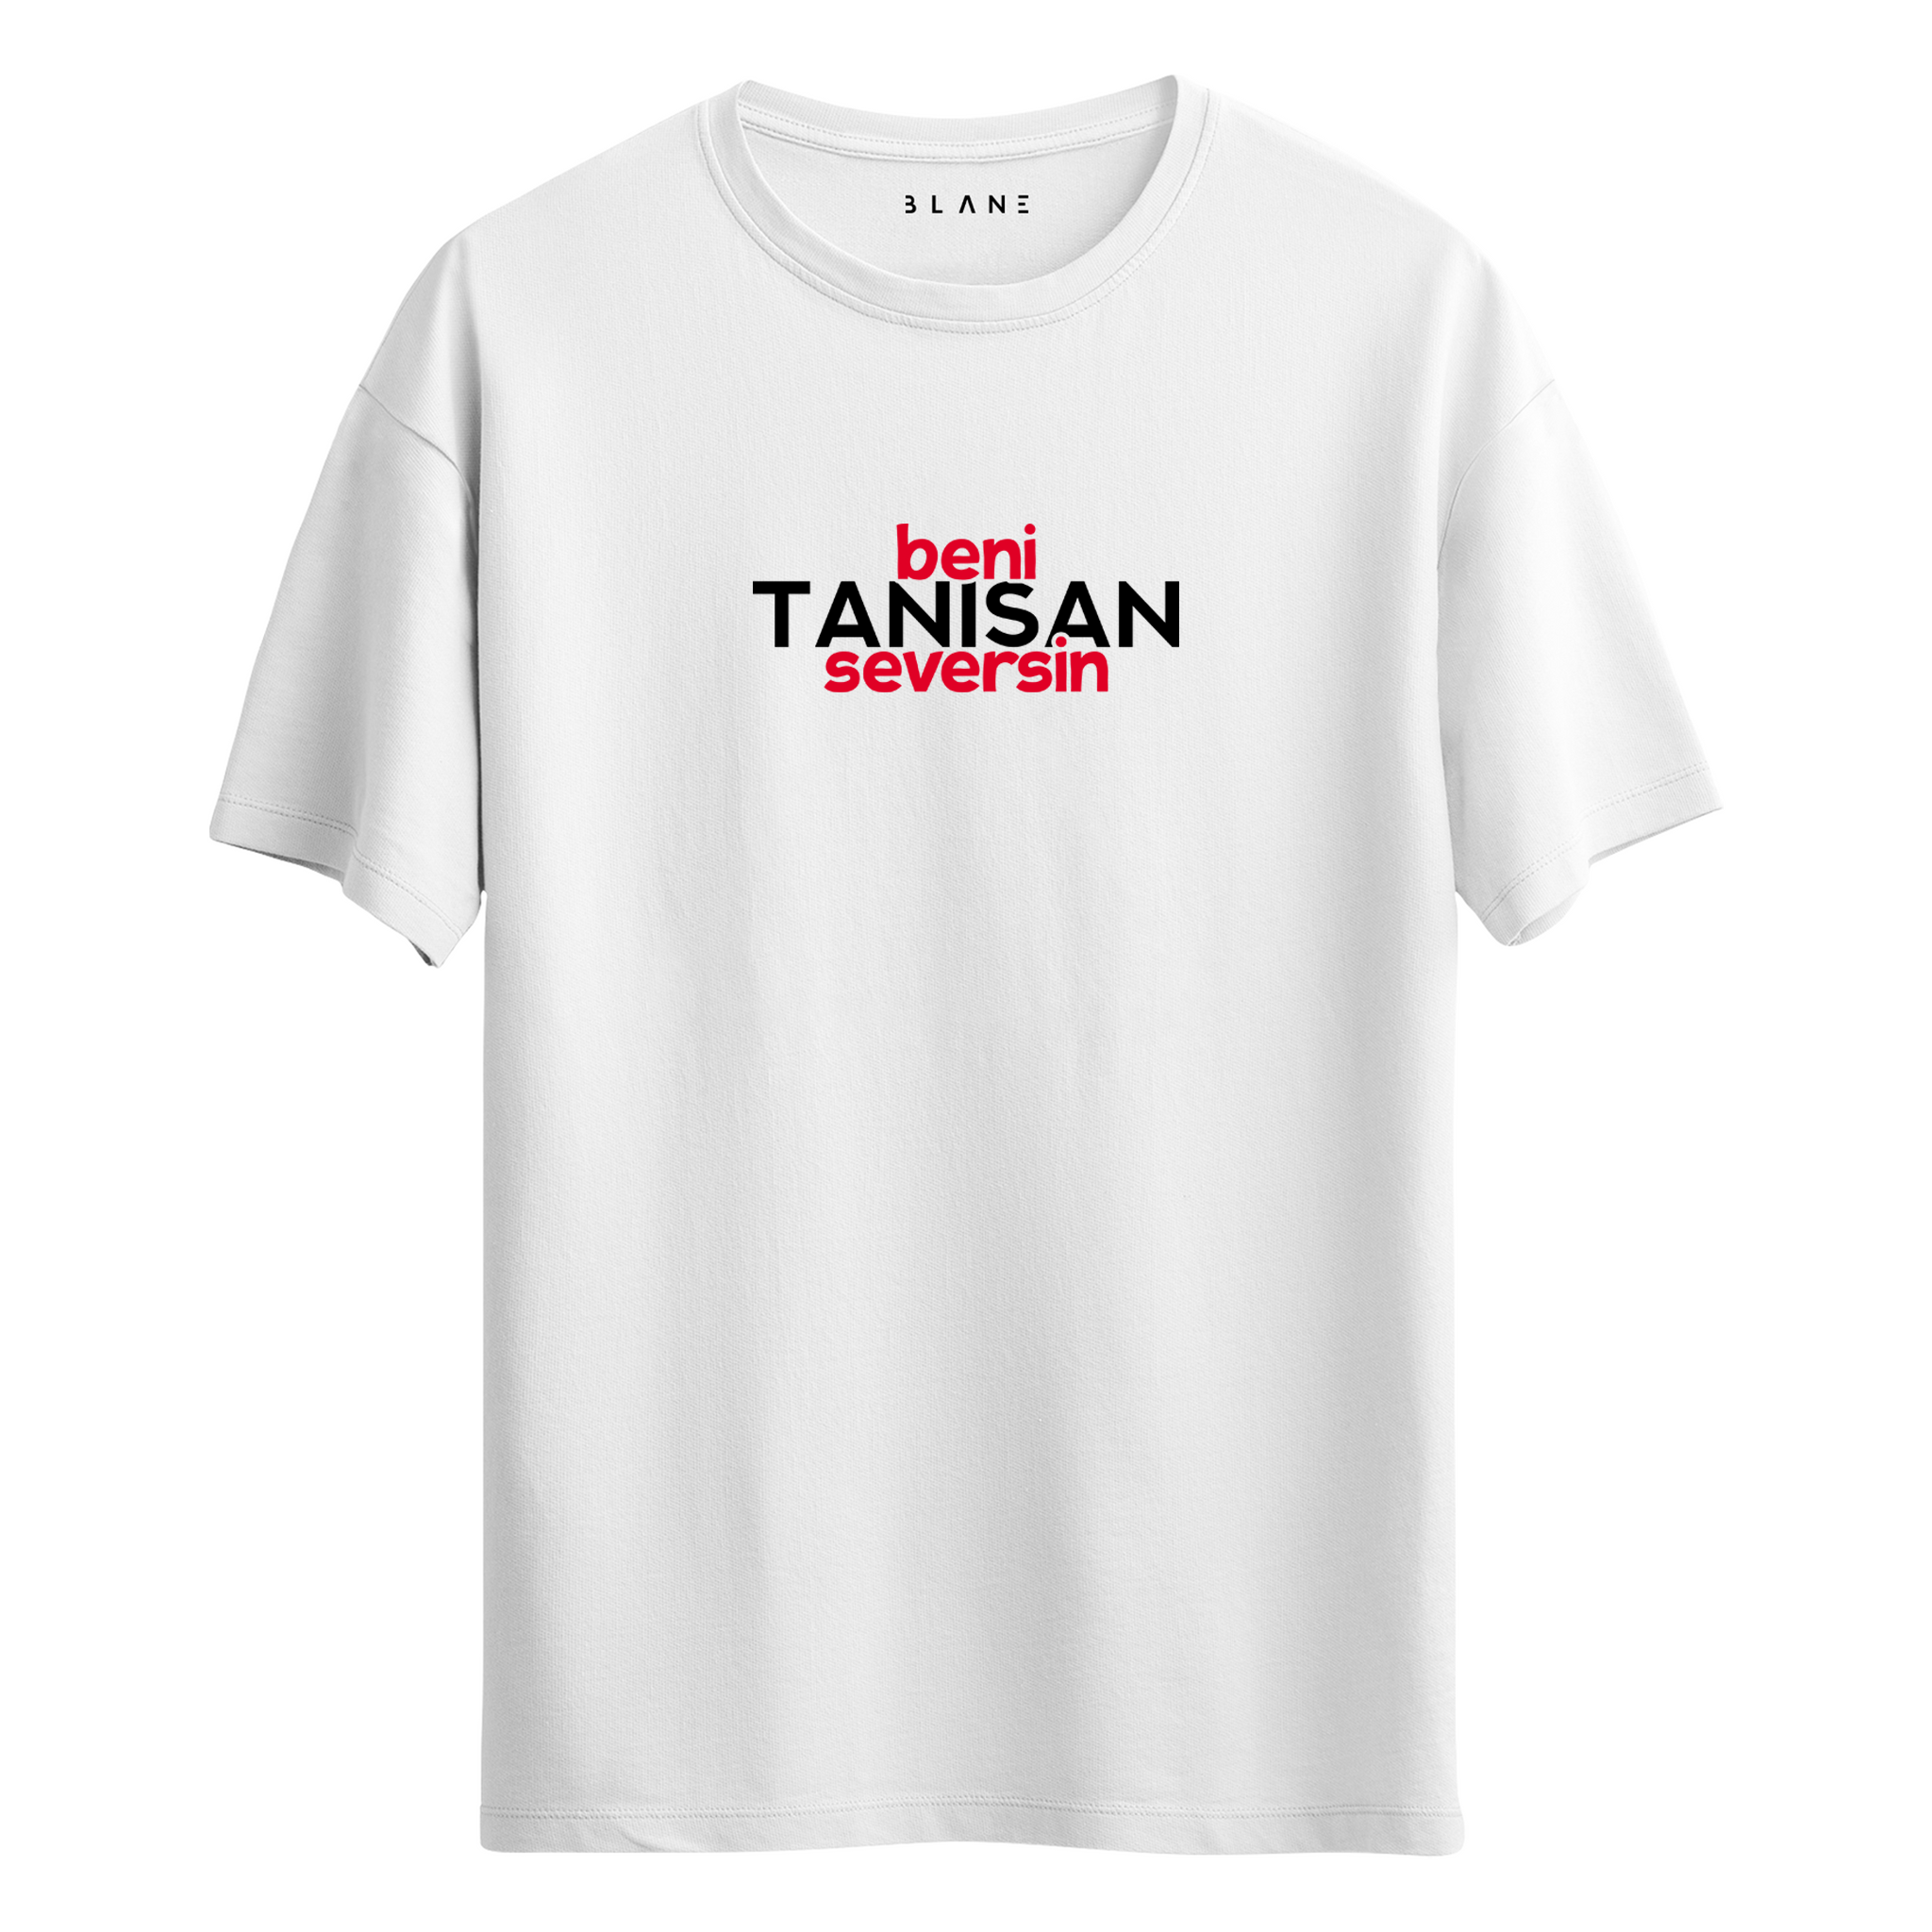 BENİ TANISAN SEVERSİN - T-Shirt